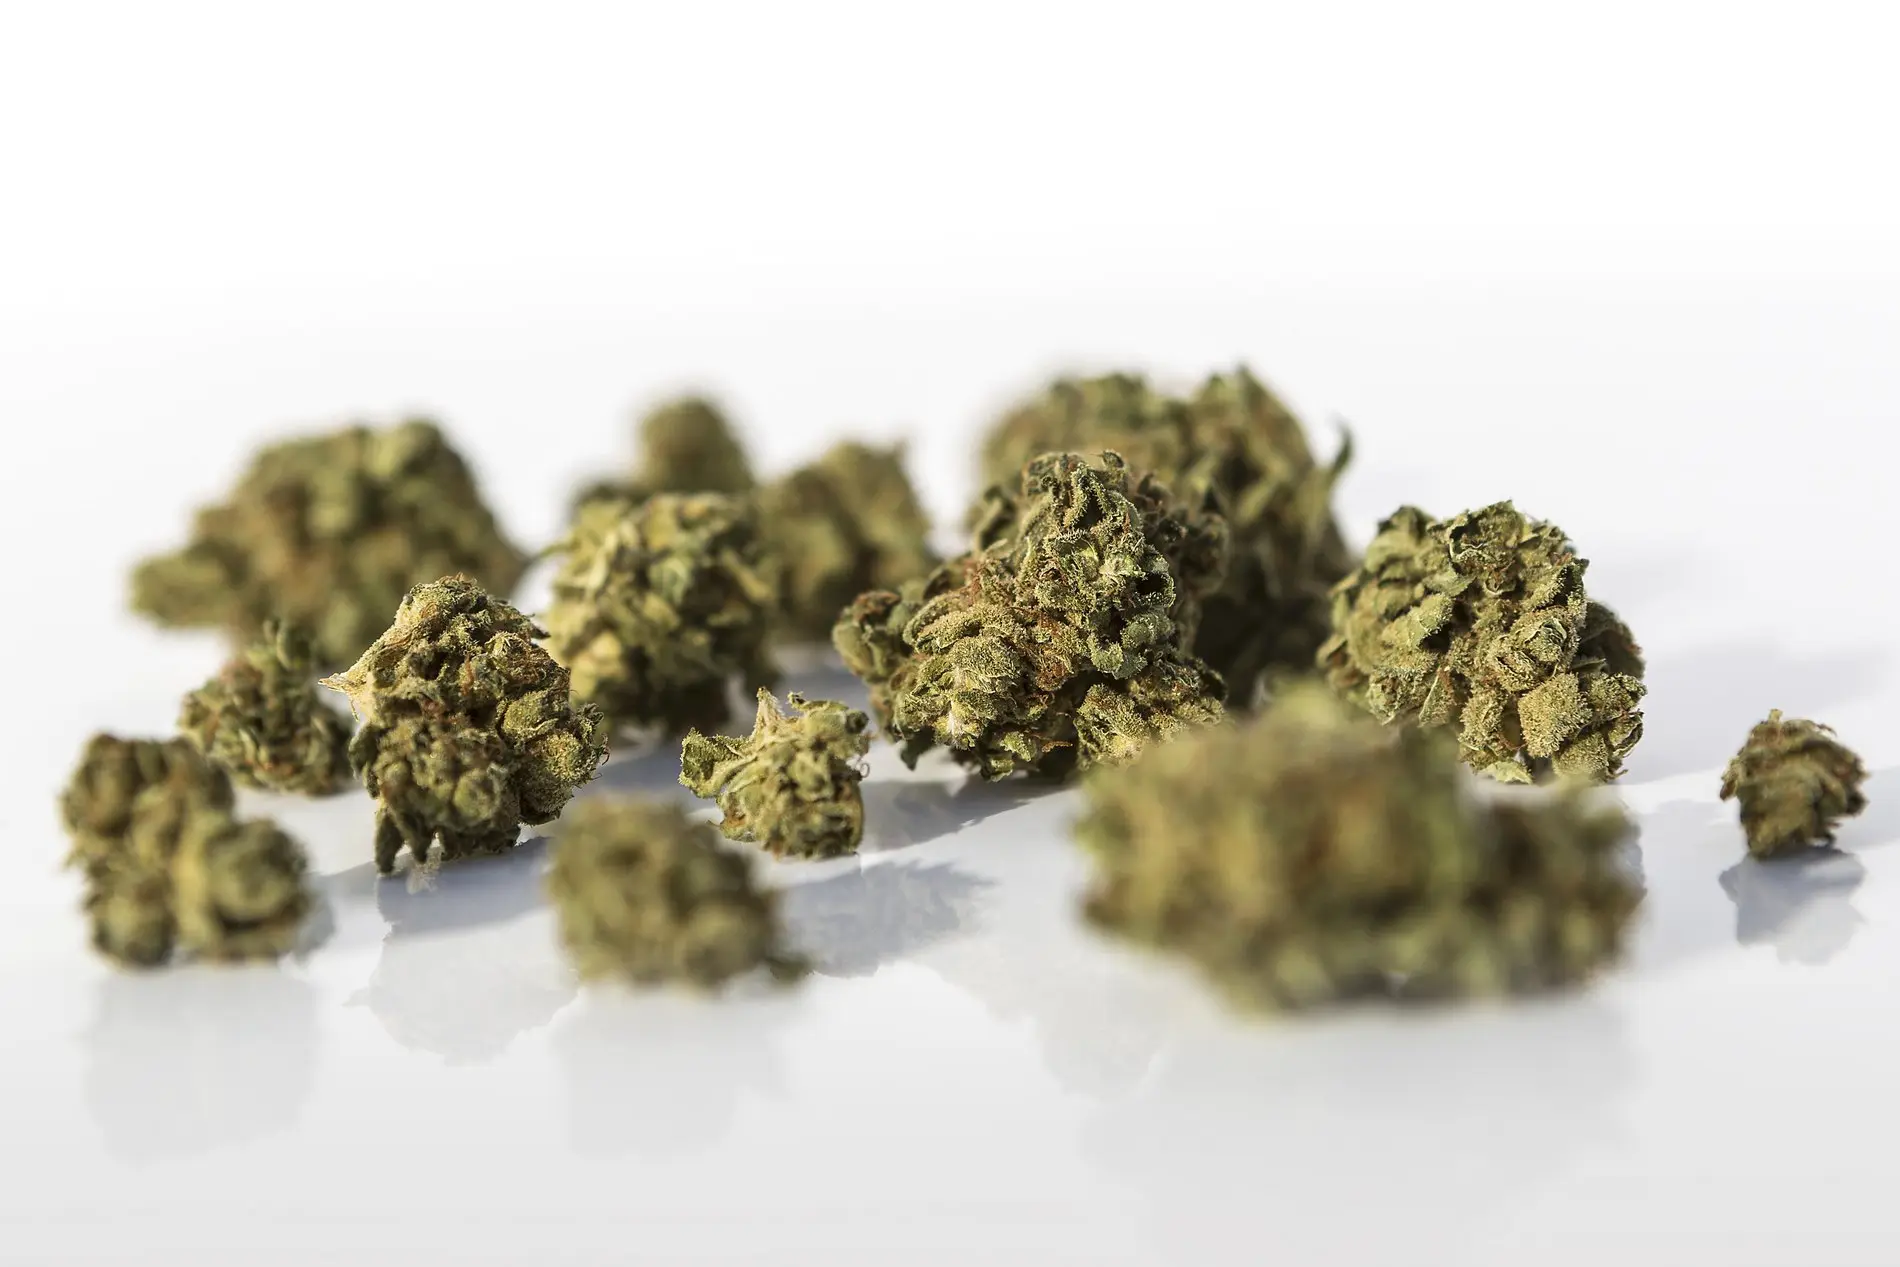 Mehrere getrocknete Cannabisblüten (Marihuana) als Nahaufnahme